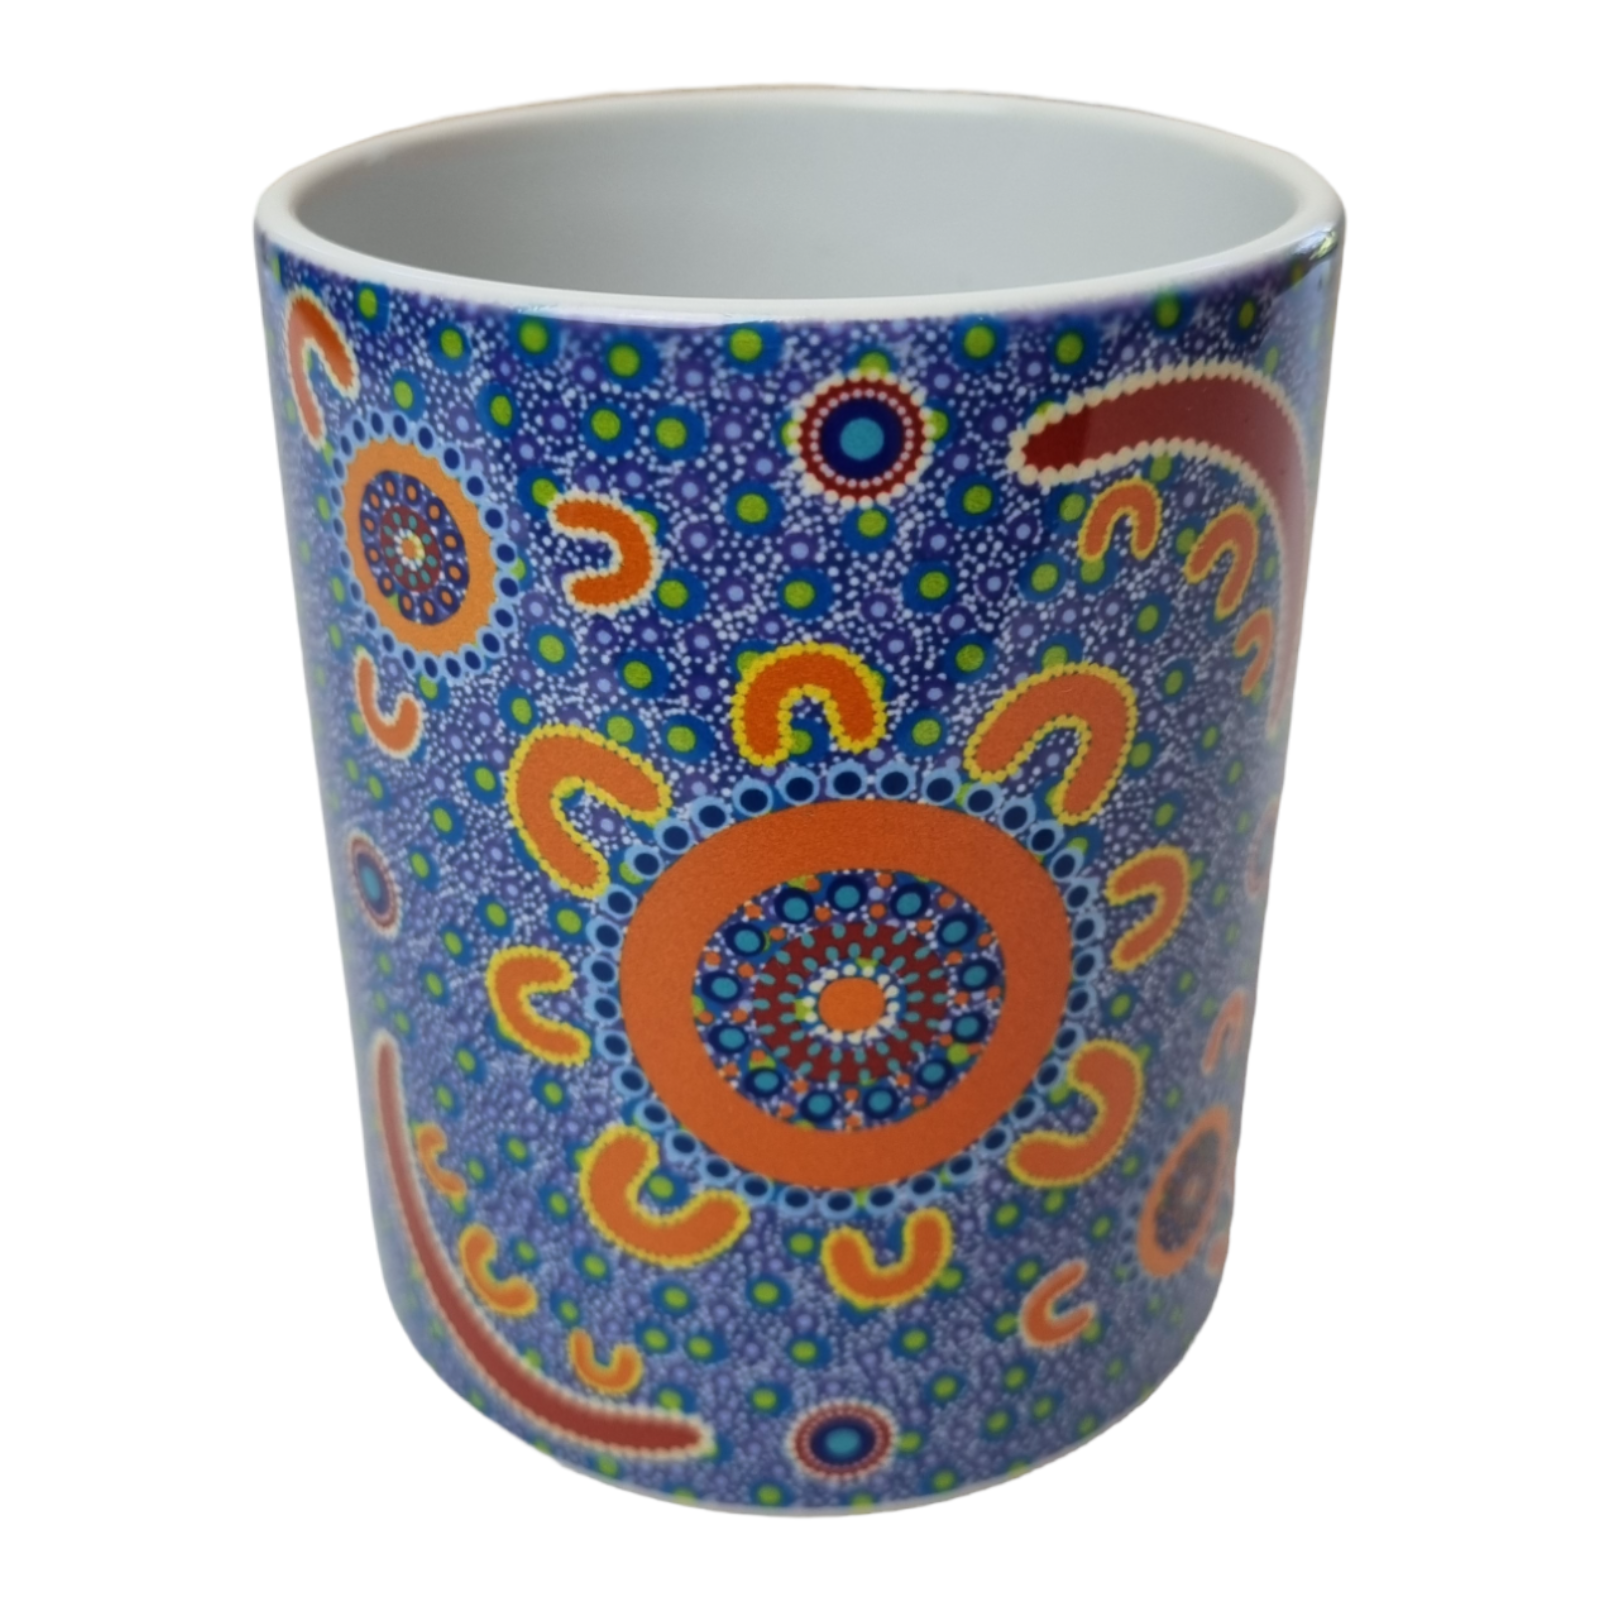 Aboriginal Coffee Mug in Gift Box Indigenous Artist Bulurru Cup Family Camping